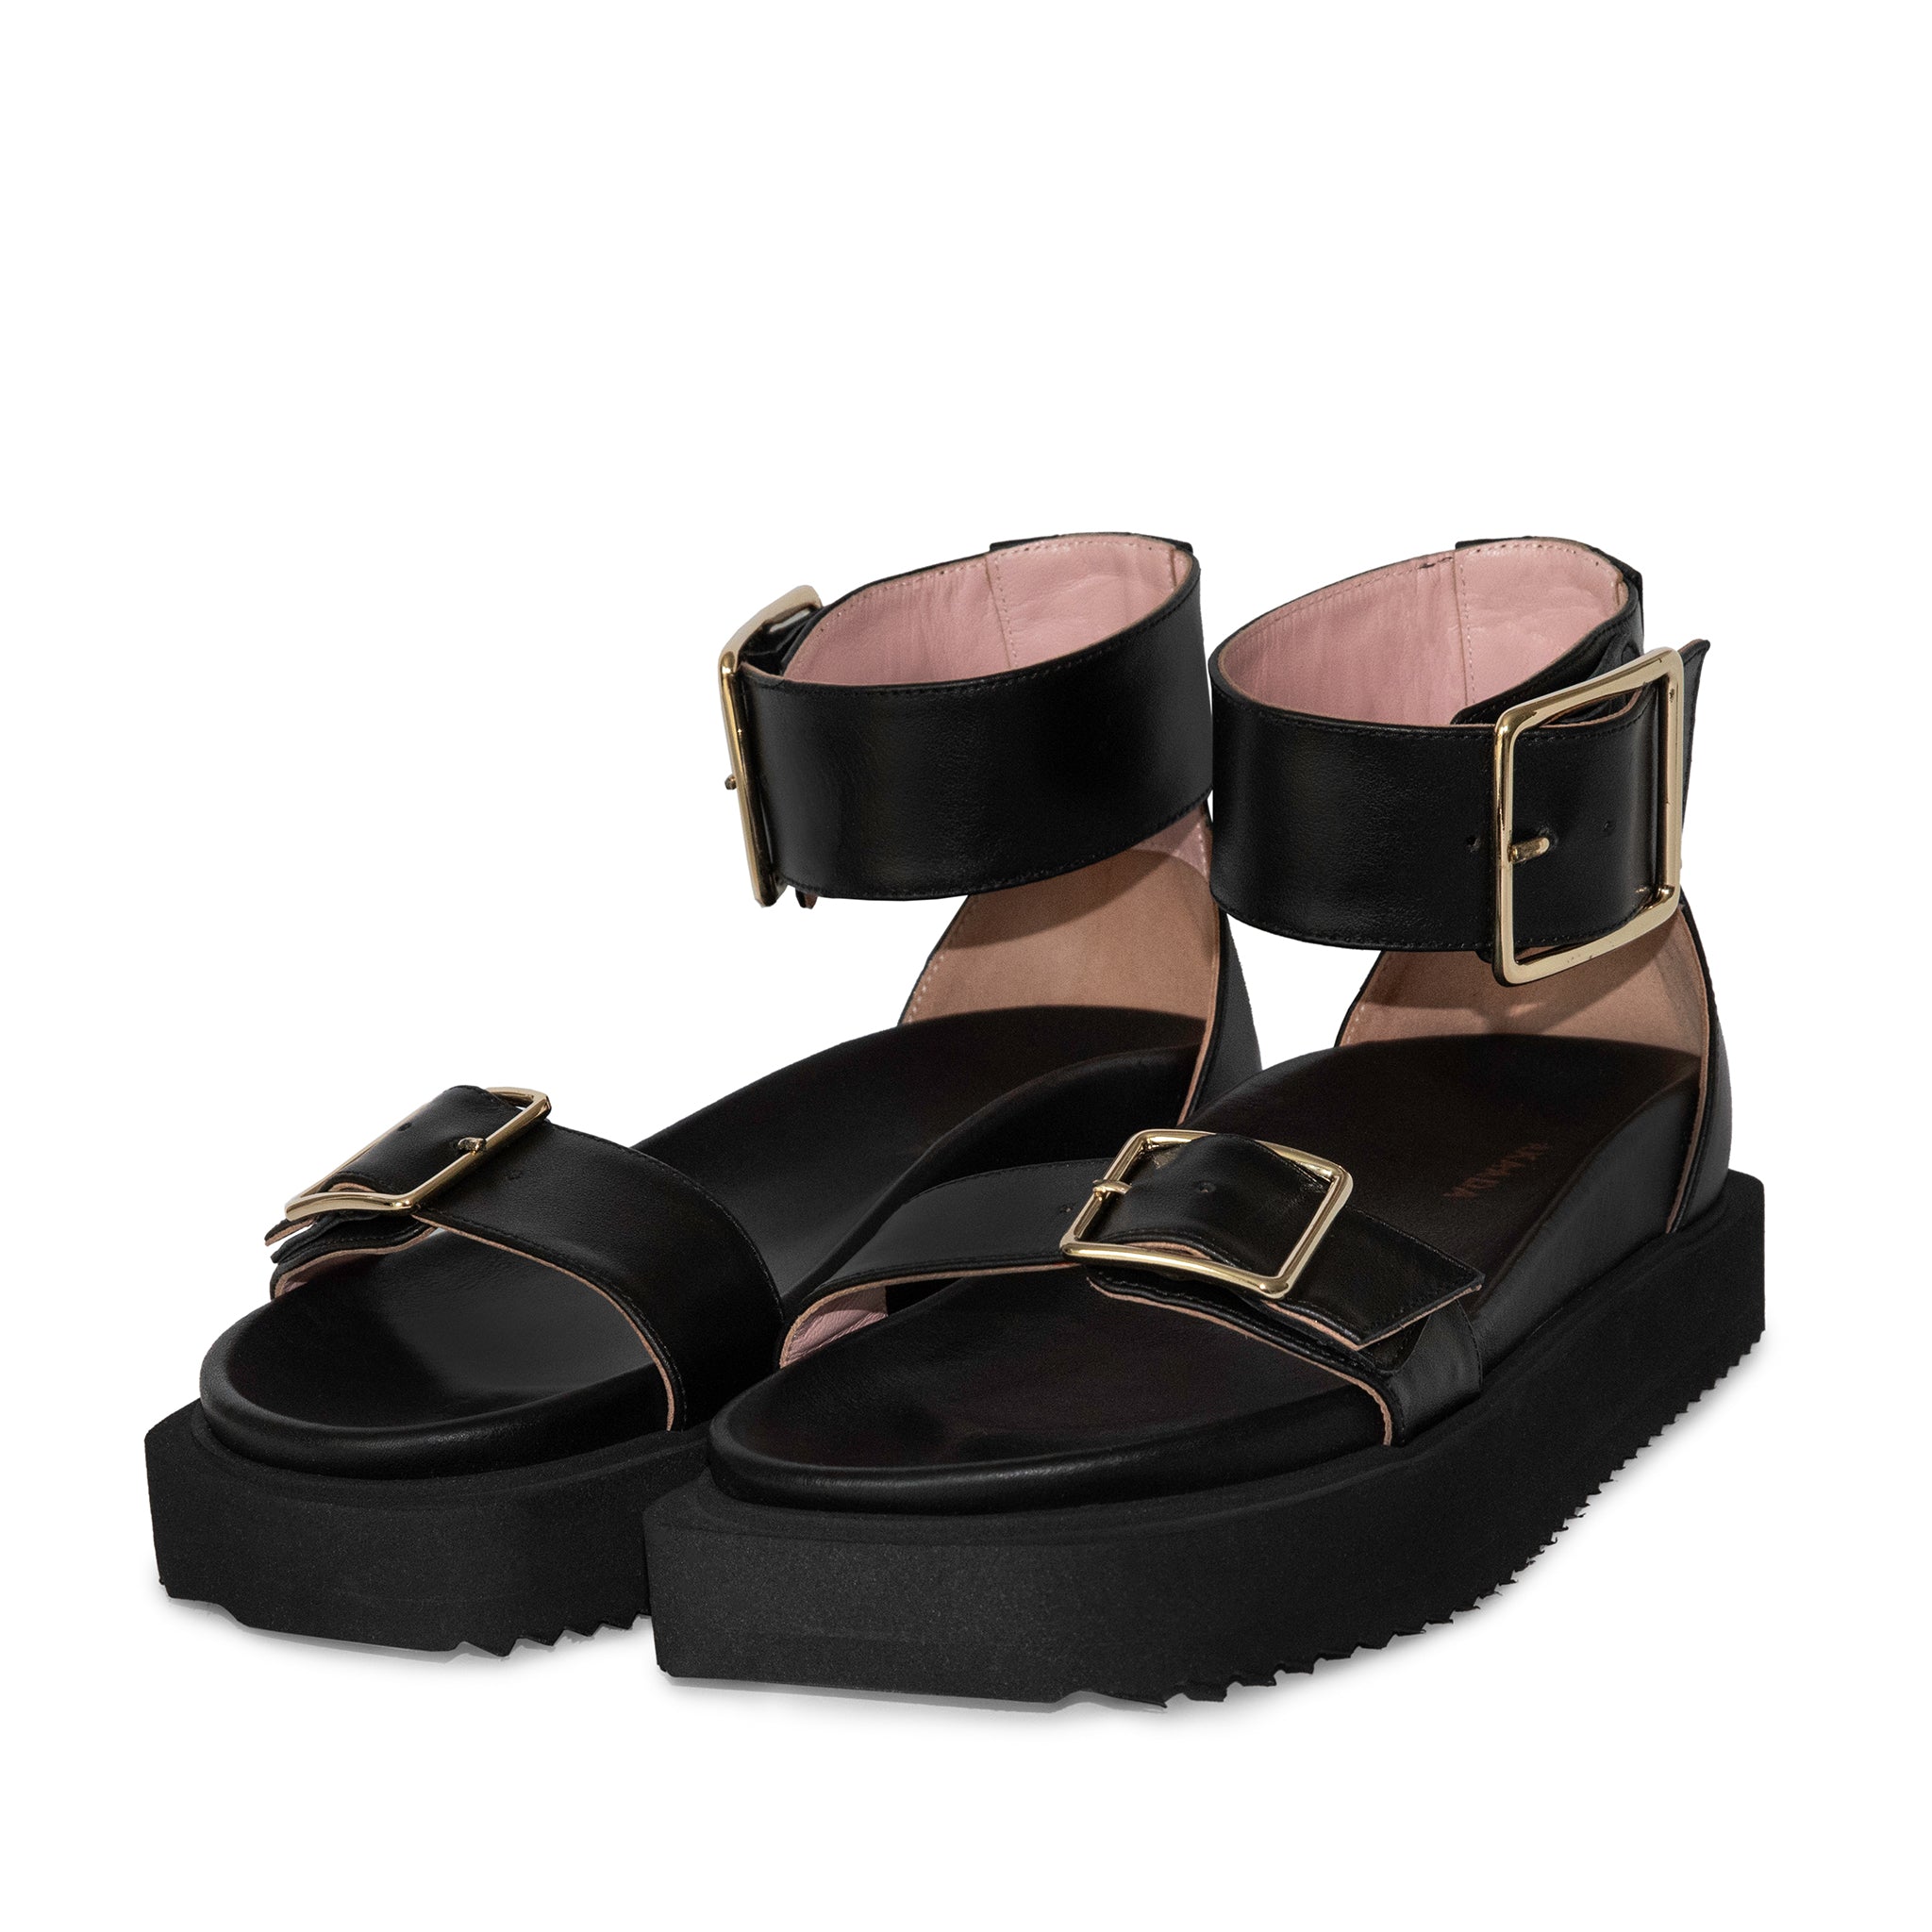 Maru Black Leather Sandals LES7487-BLACK-5